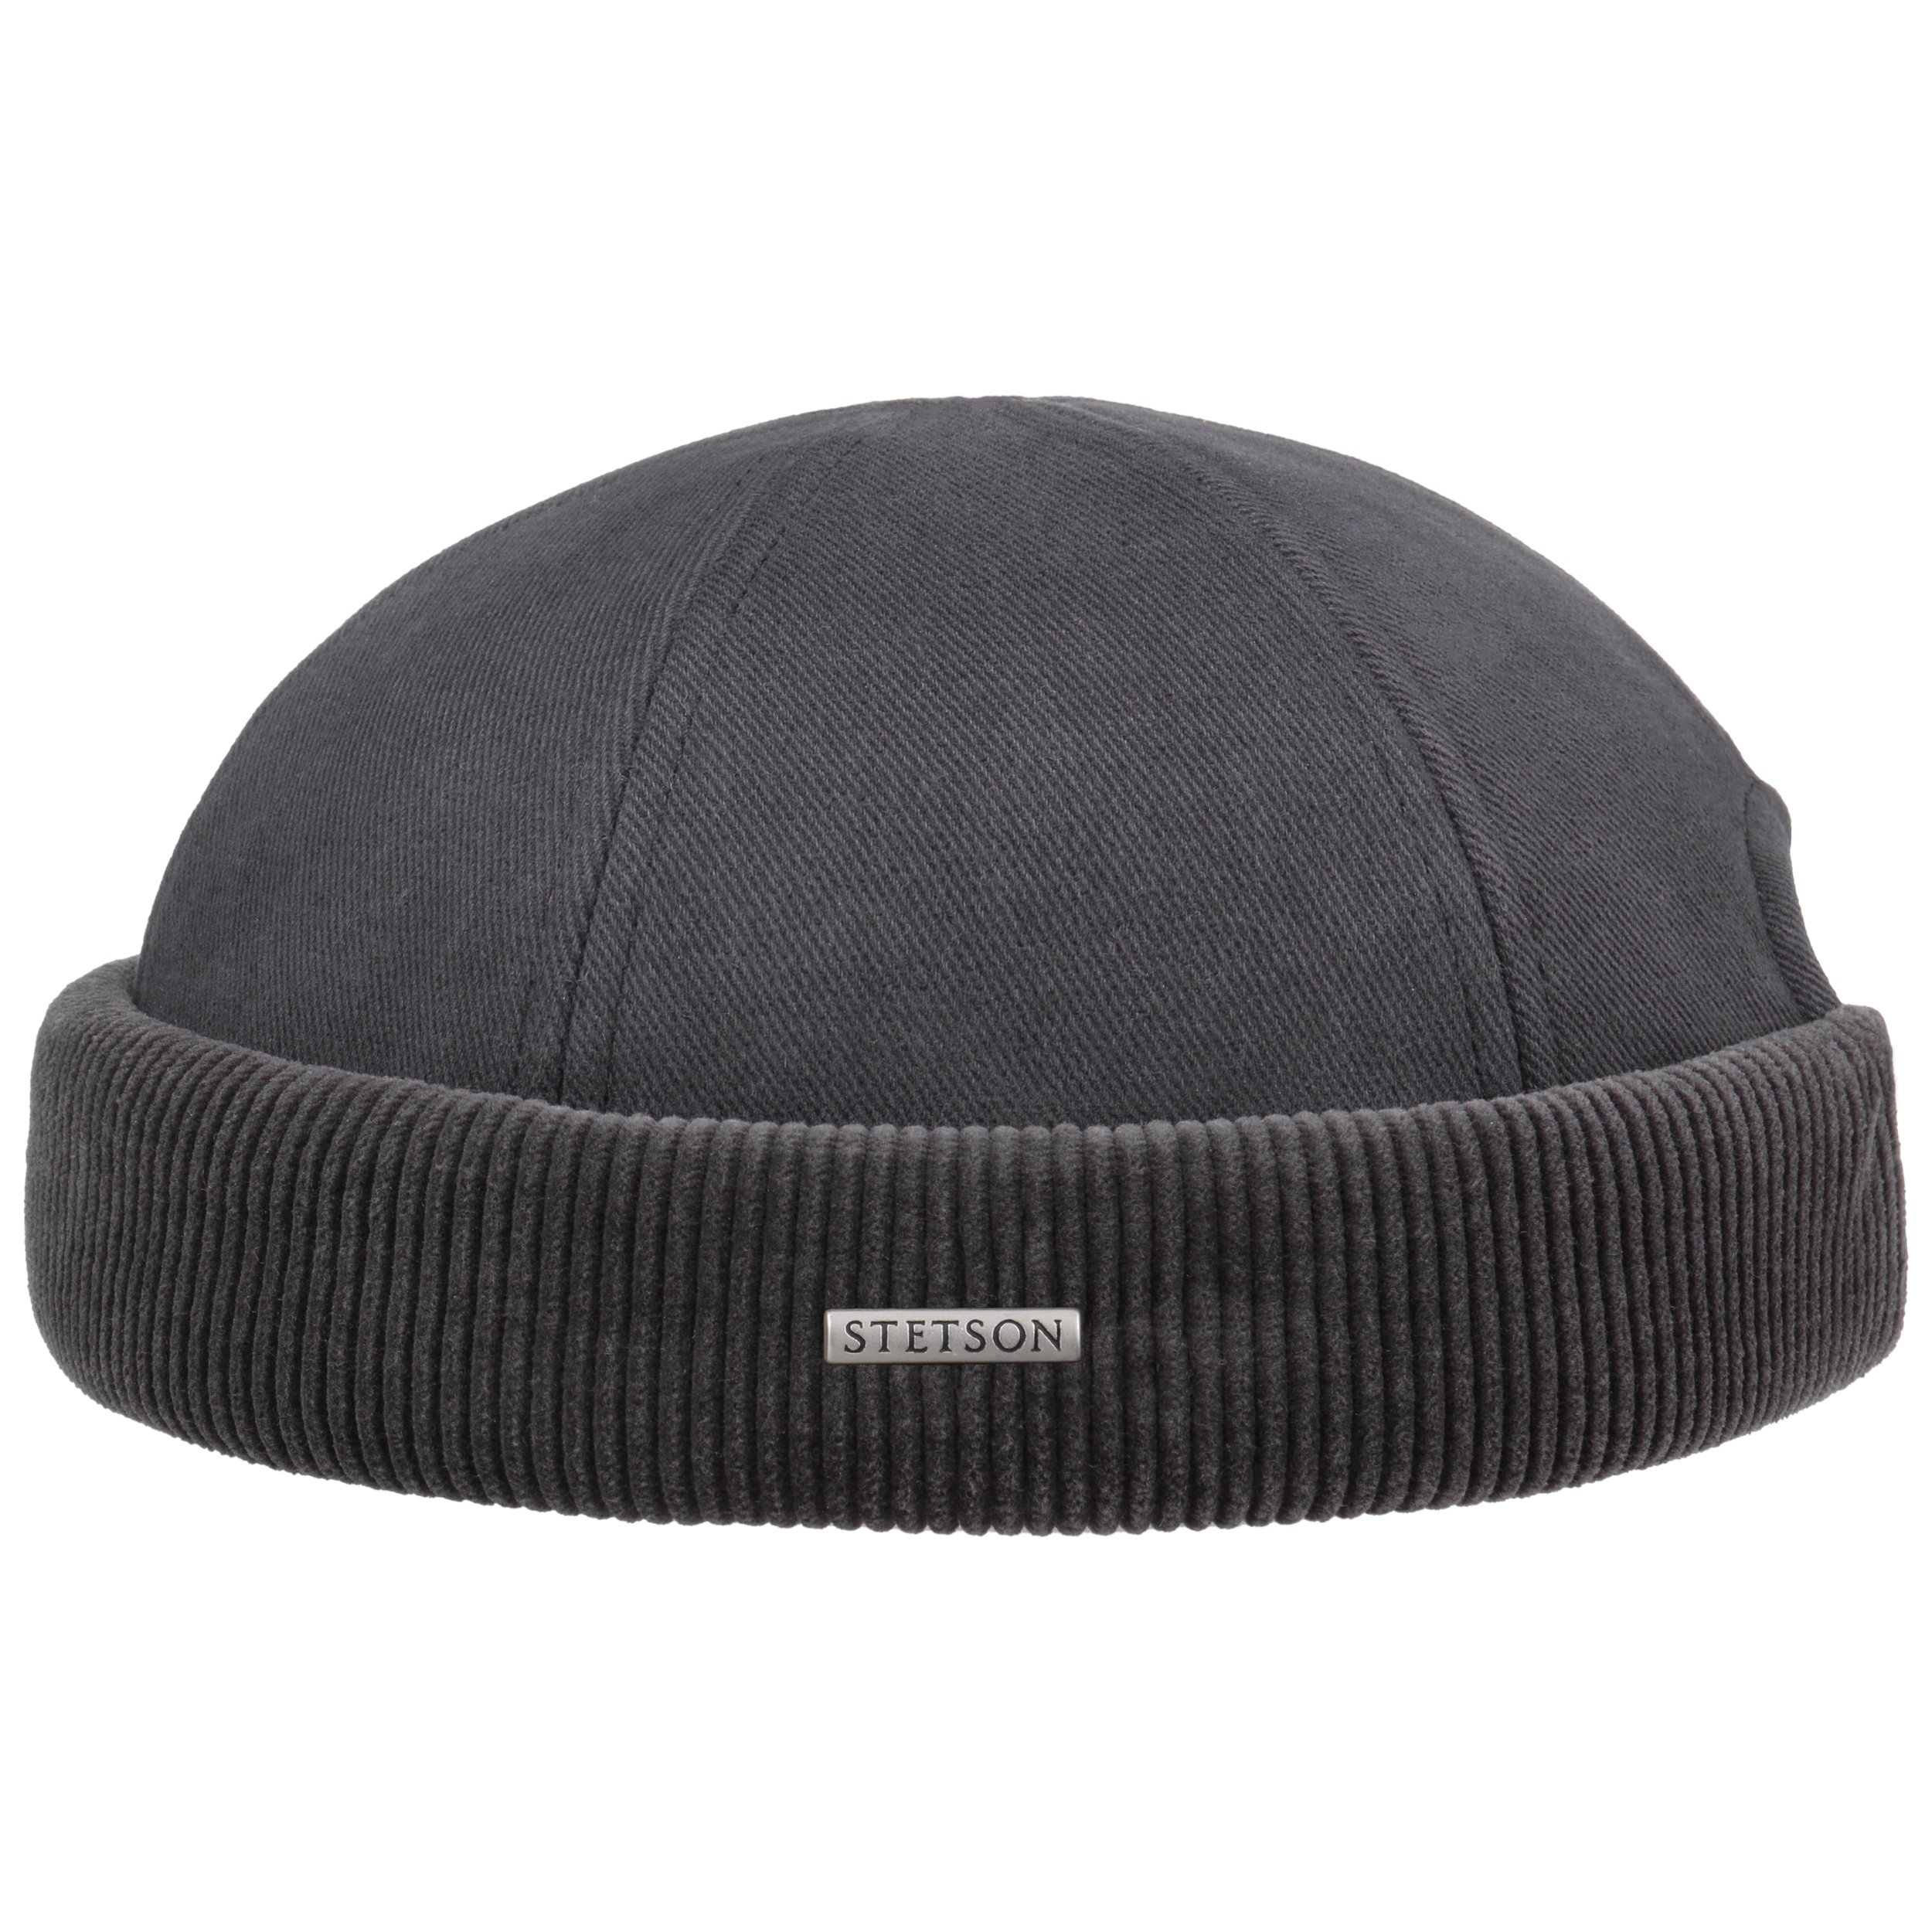 Kensington Soft Hat € Docker by - 69,00 Stetson Cotton